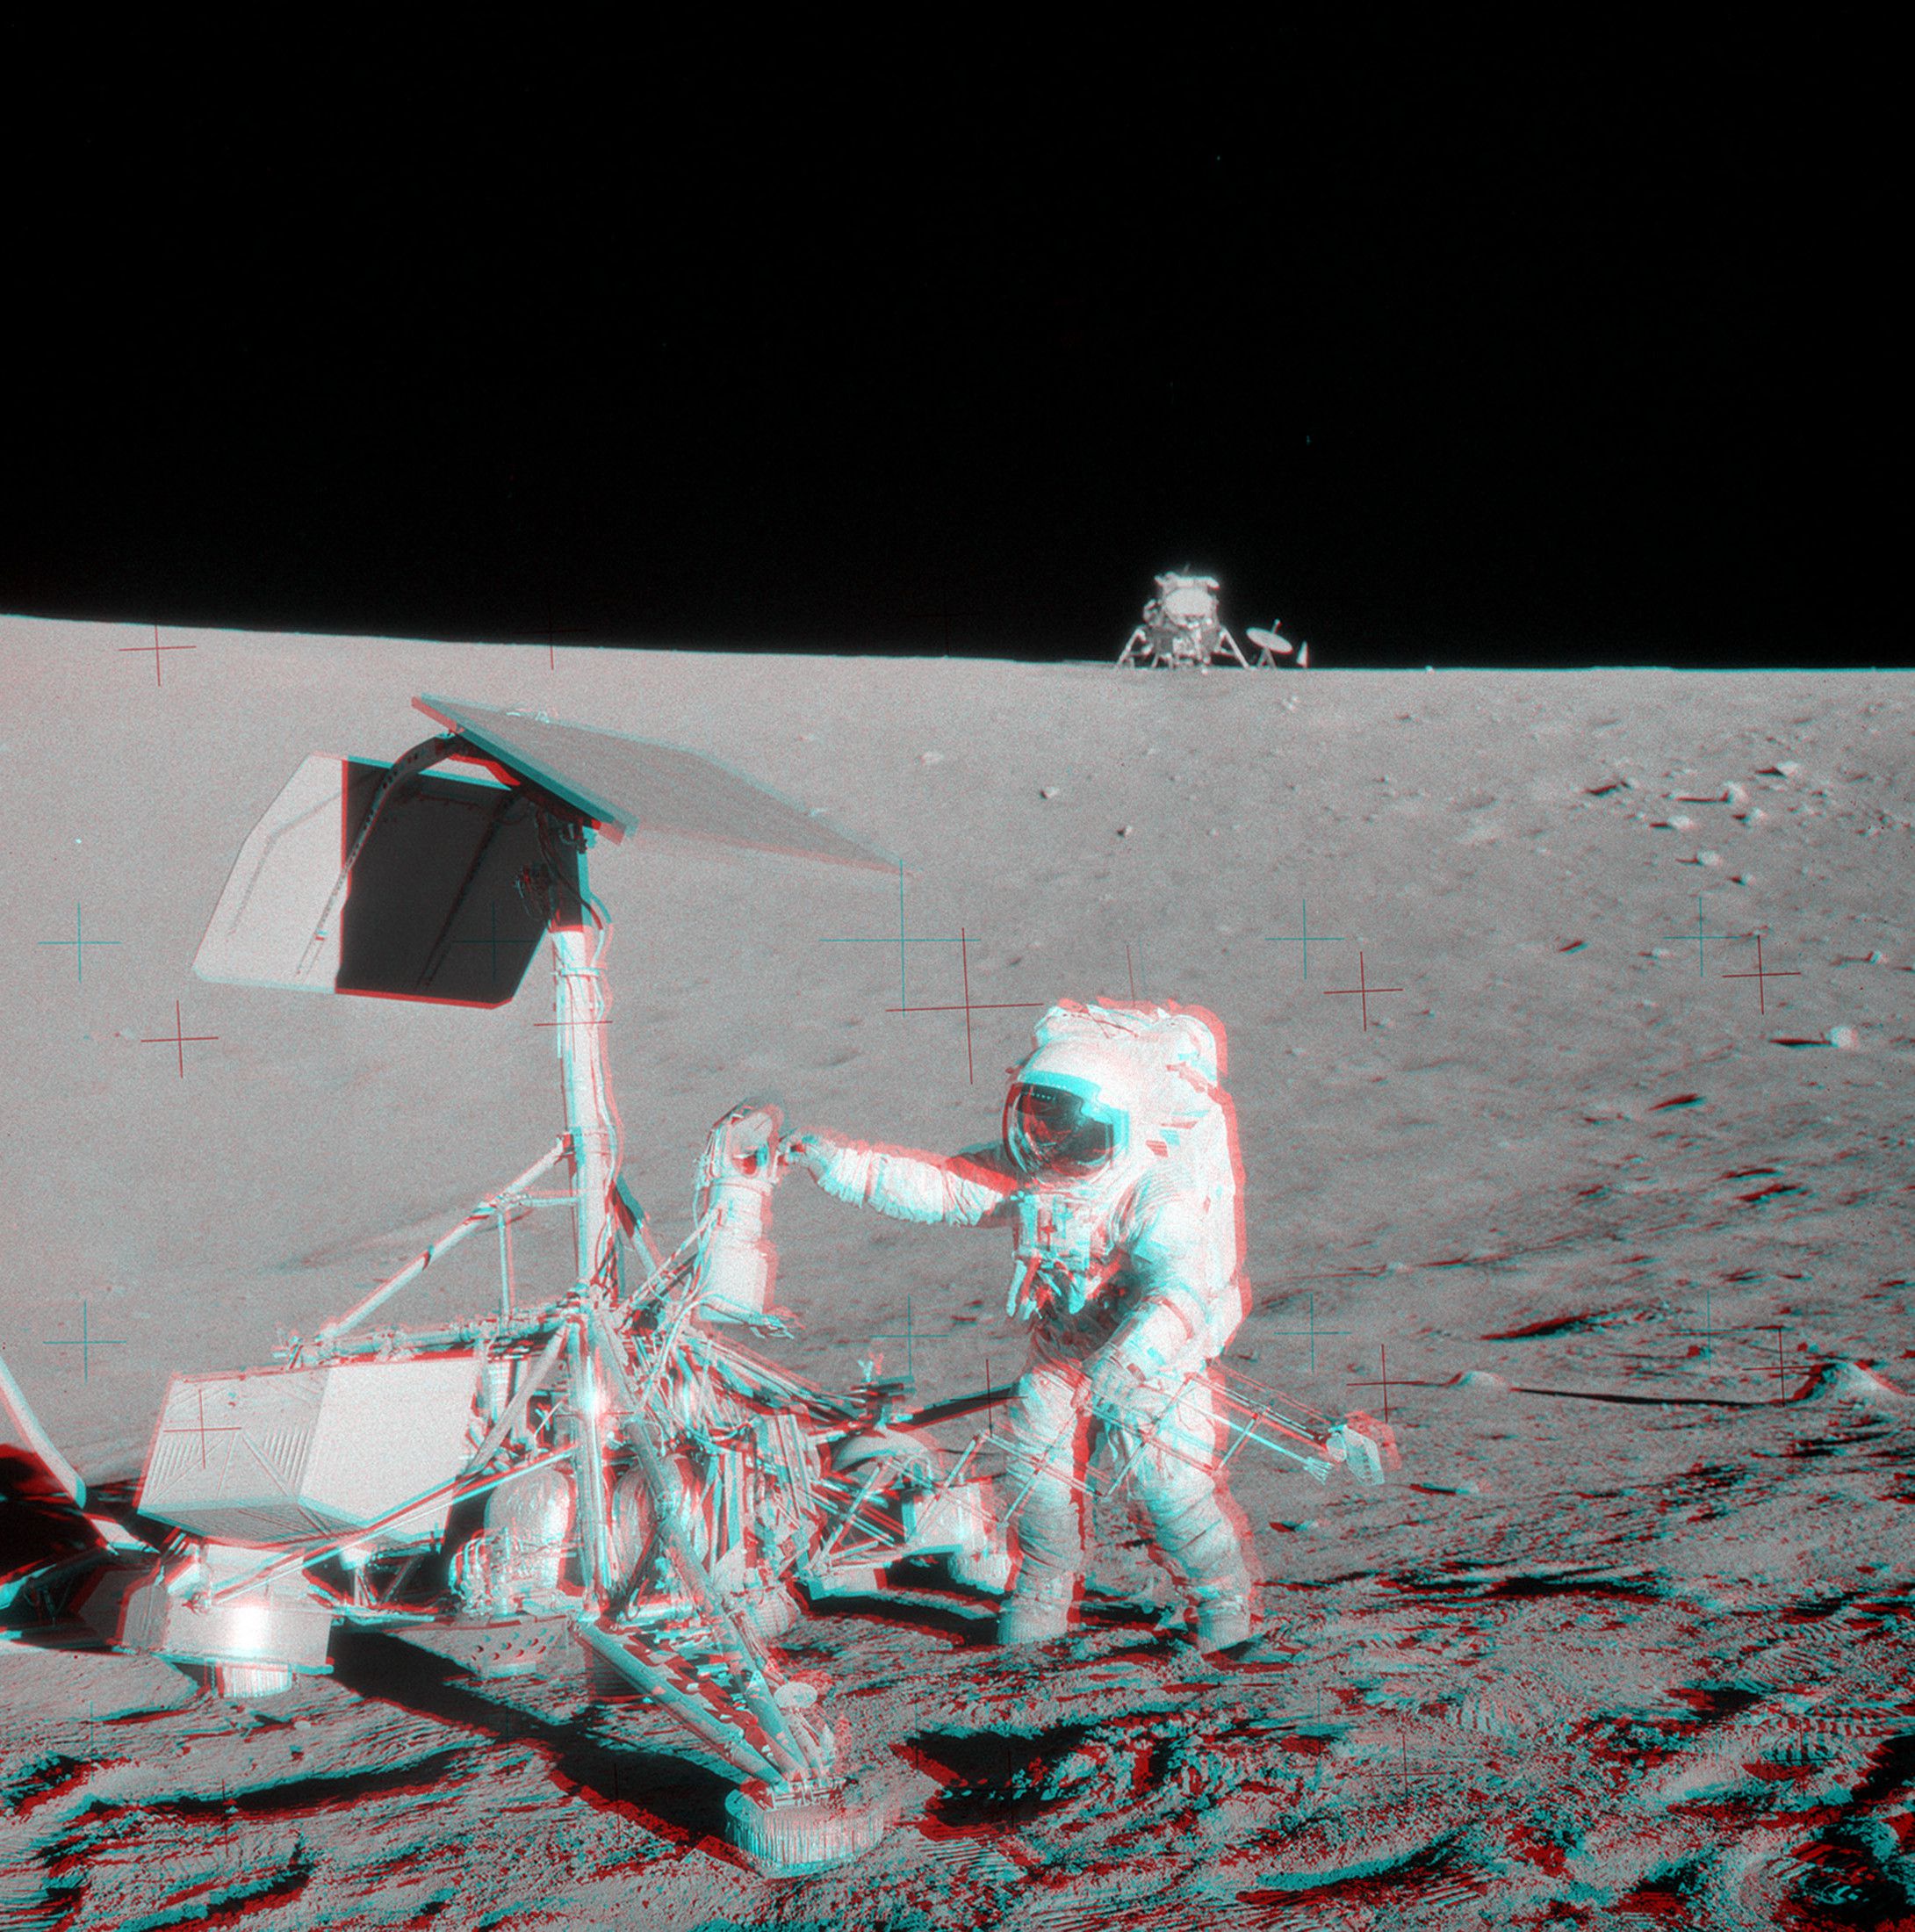  Apollo 12 and Surveyor 3 Stereo View 